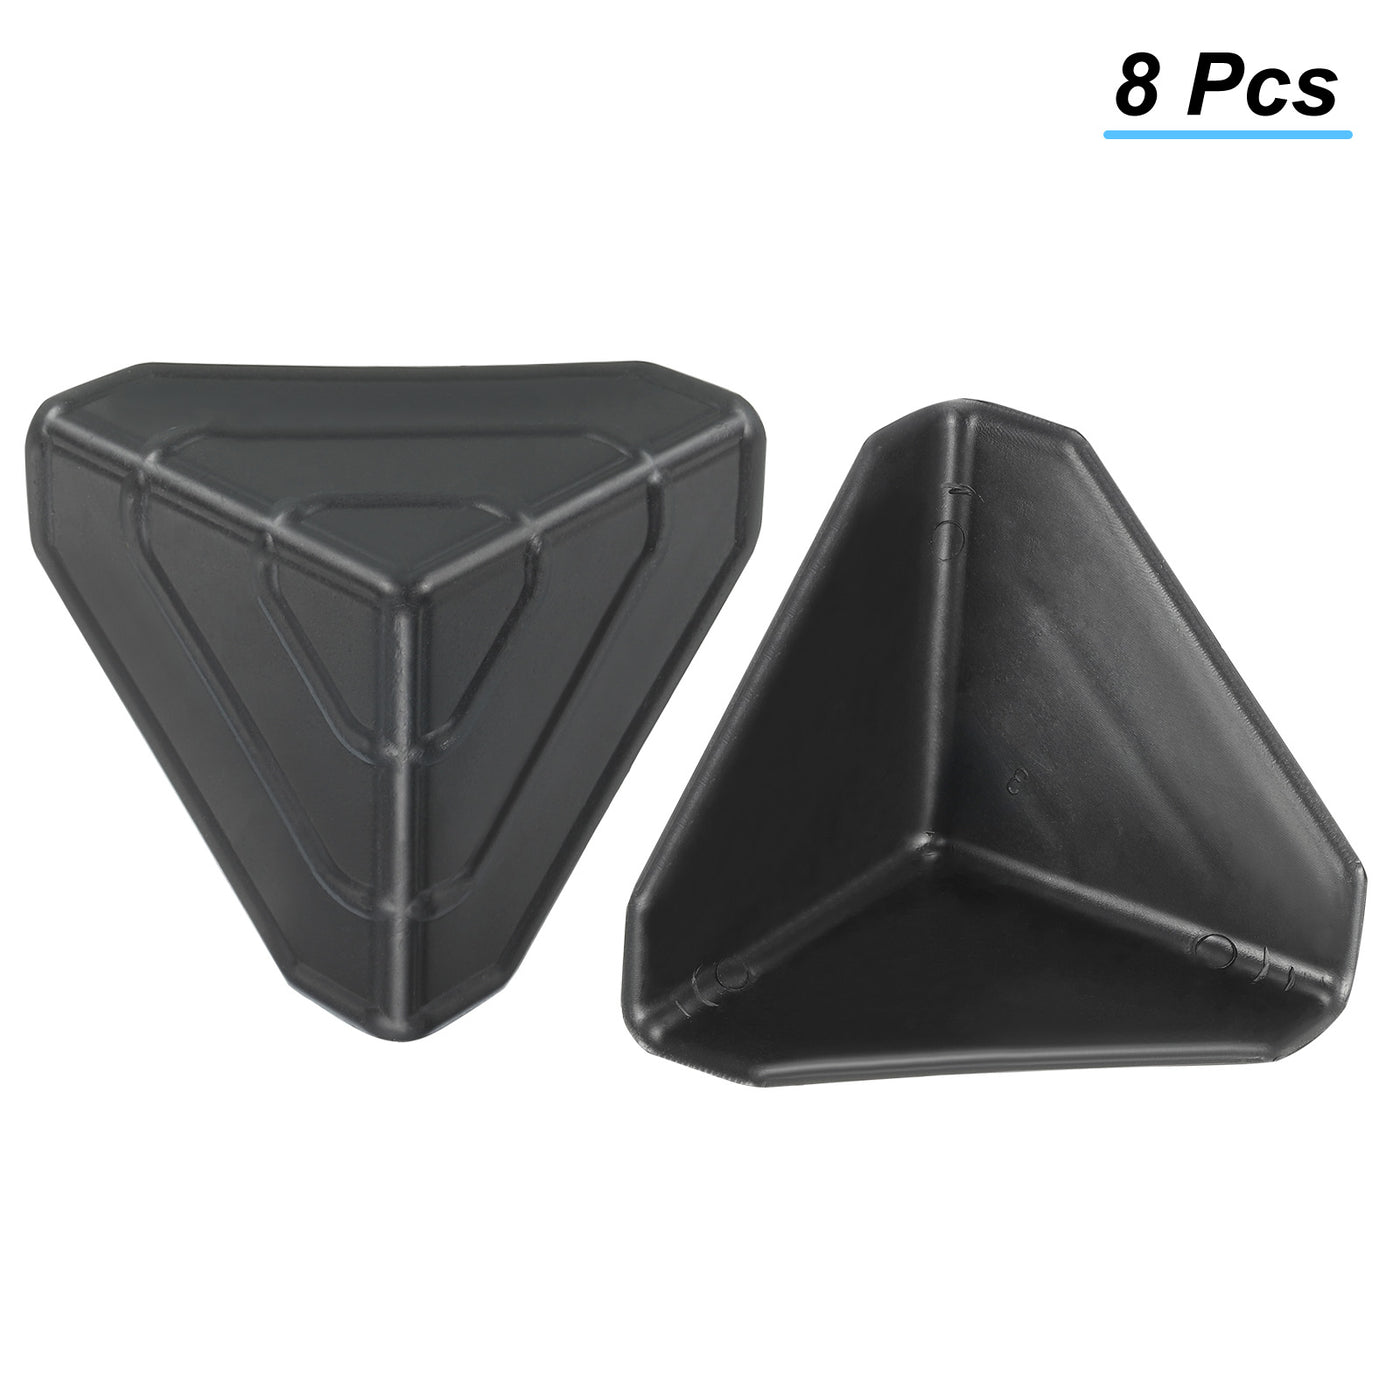 Harfington Corner Protector PP Plastic 3.5" x 3.5" x 3.5" for Carton Black Pack of 8